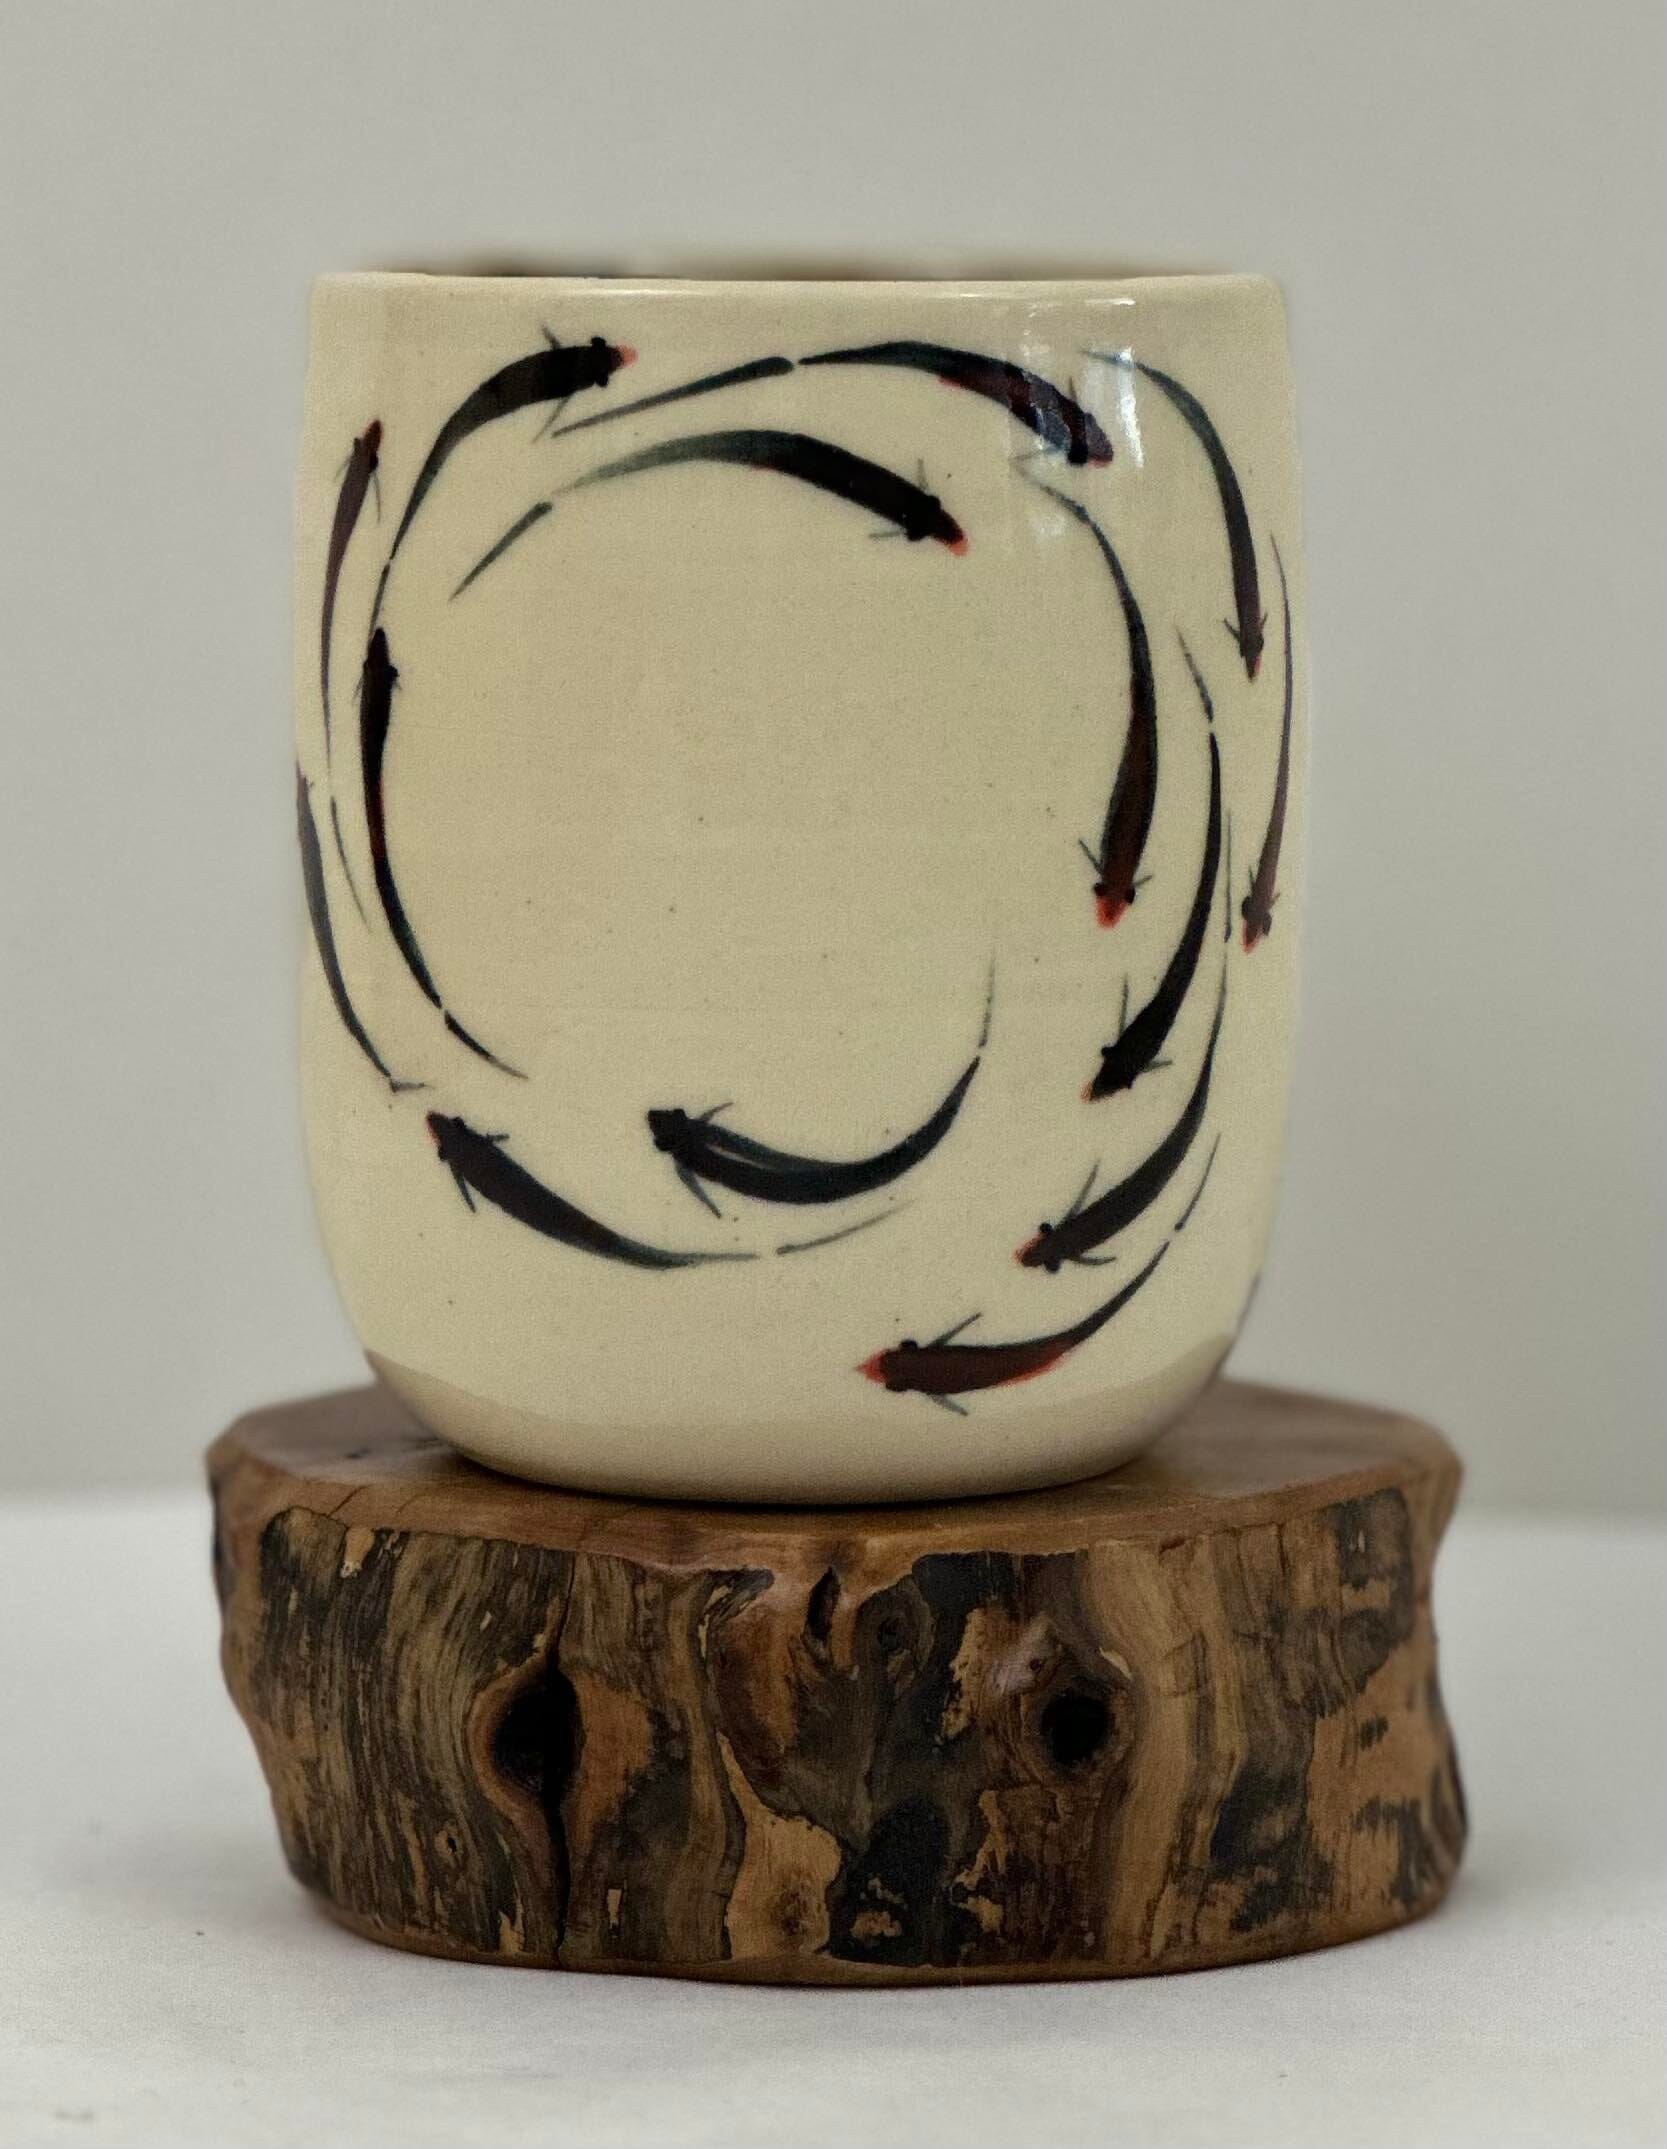 Stoneware Tumbler With Fish Image Ceramic & Pottery Glazes Elizabeth Schowachert Art